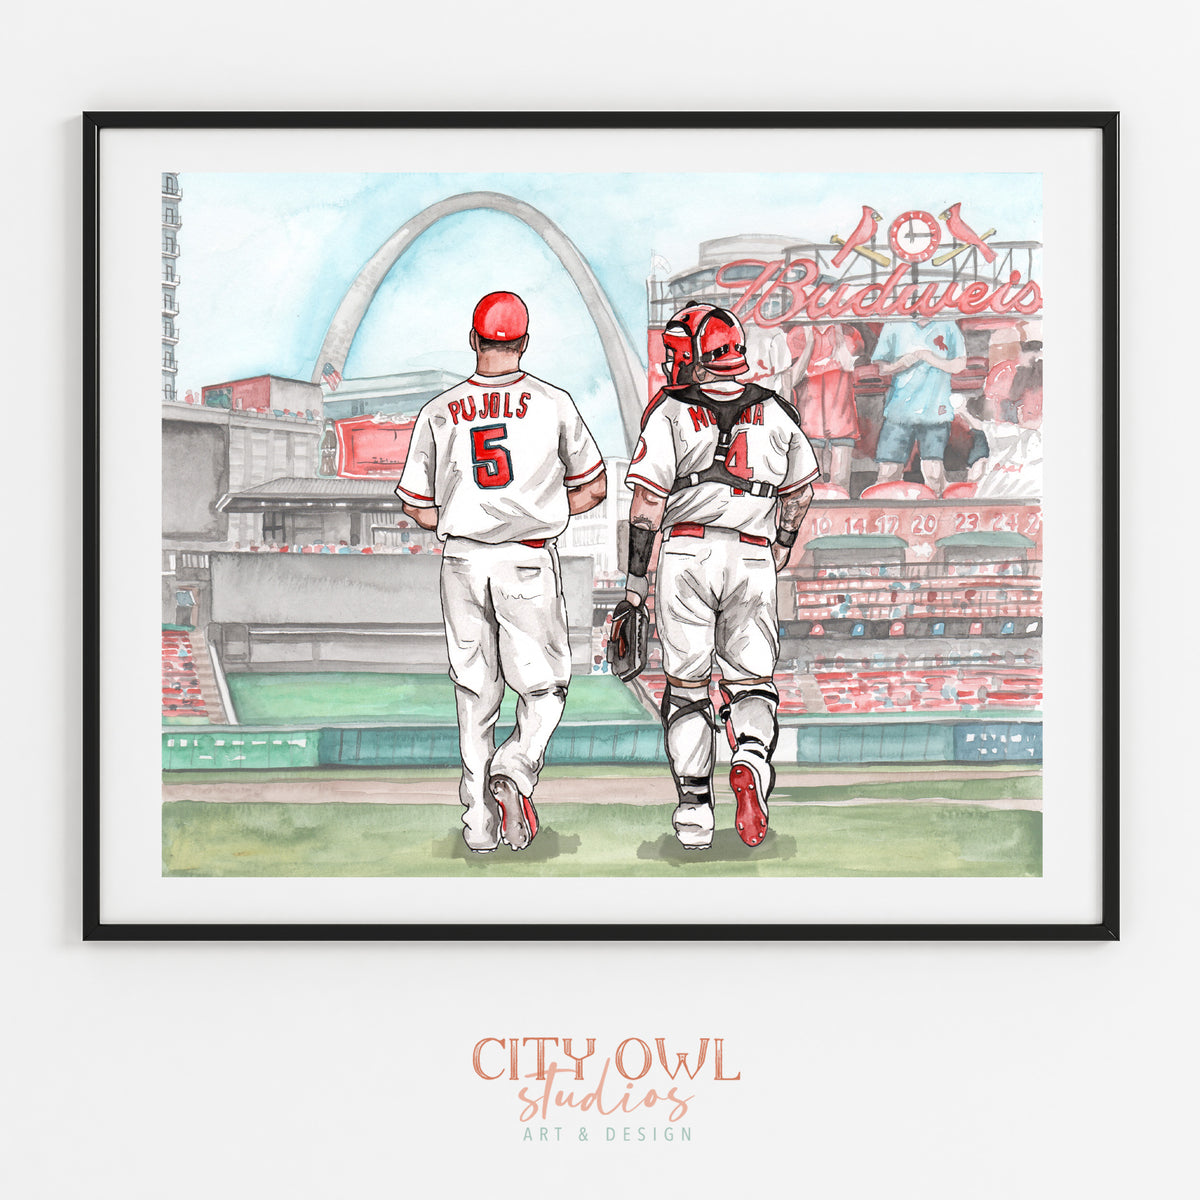 St. Louis Cardinals Baseball The Final Ride Print